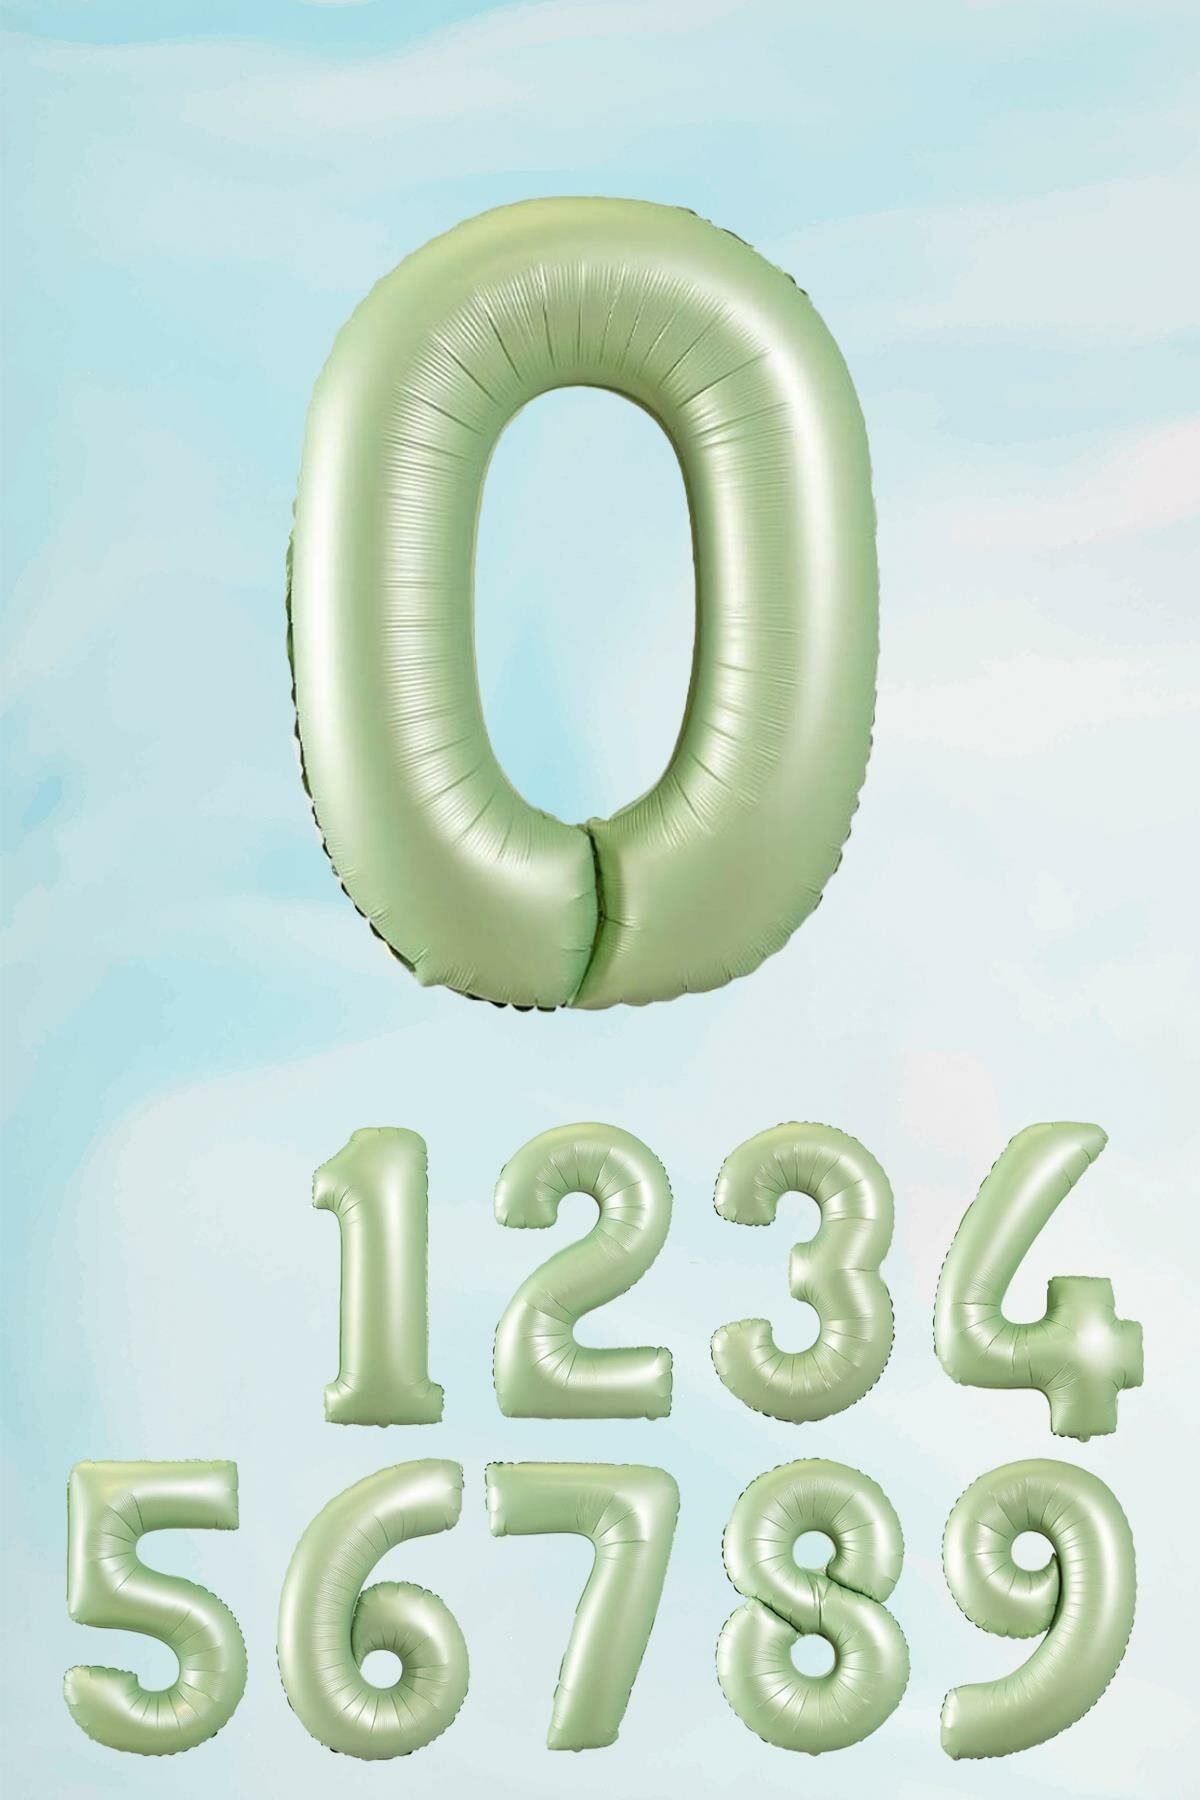 Retro Yeşil Rakam Balonlar 80 cm Retro Renk Yaş Balonları